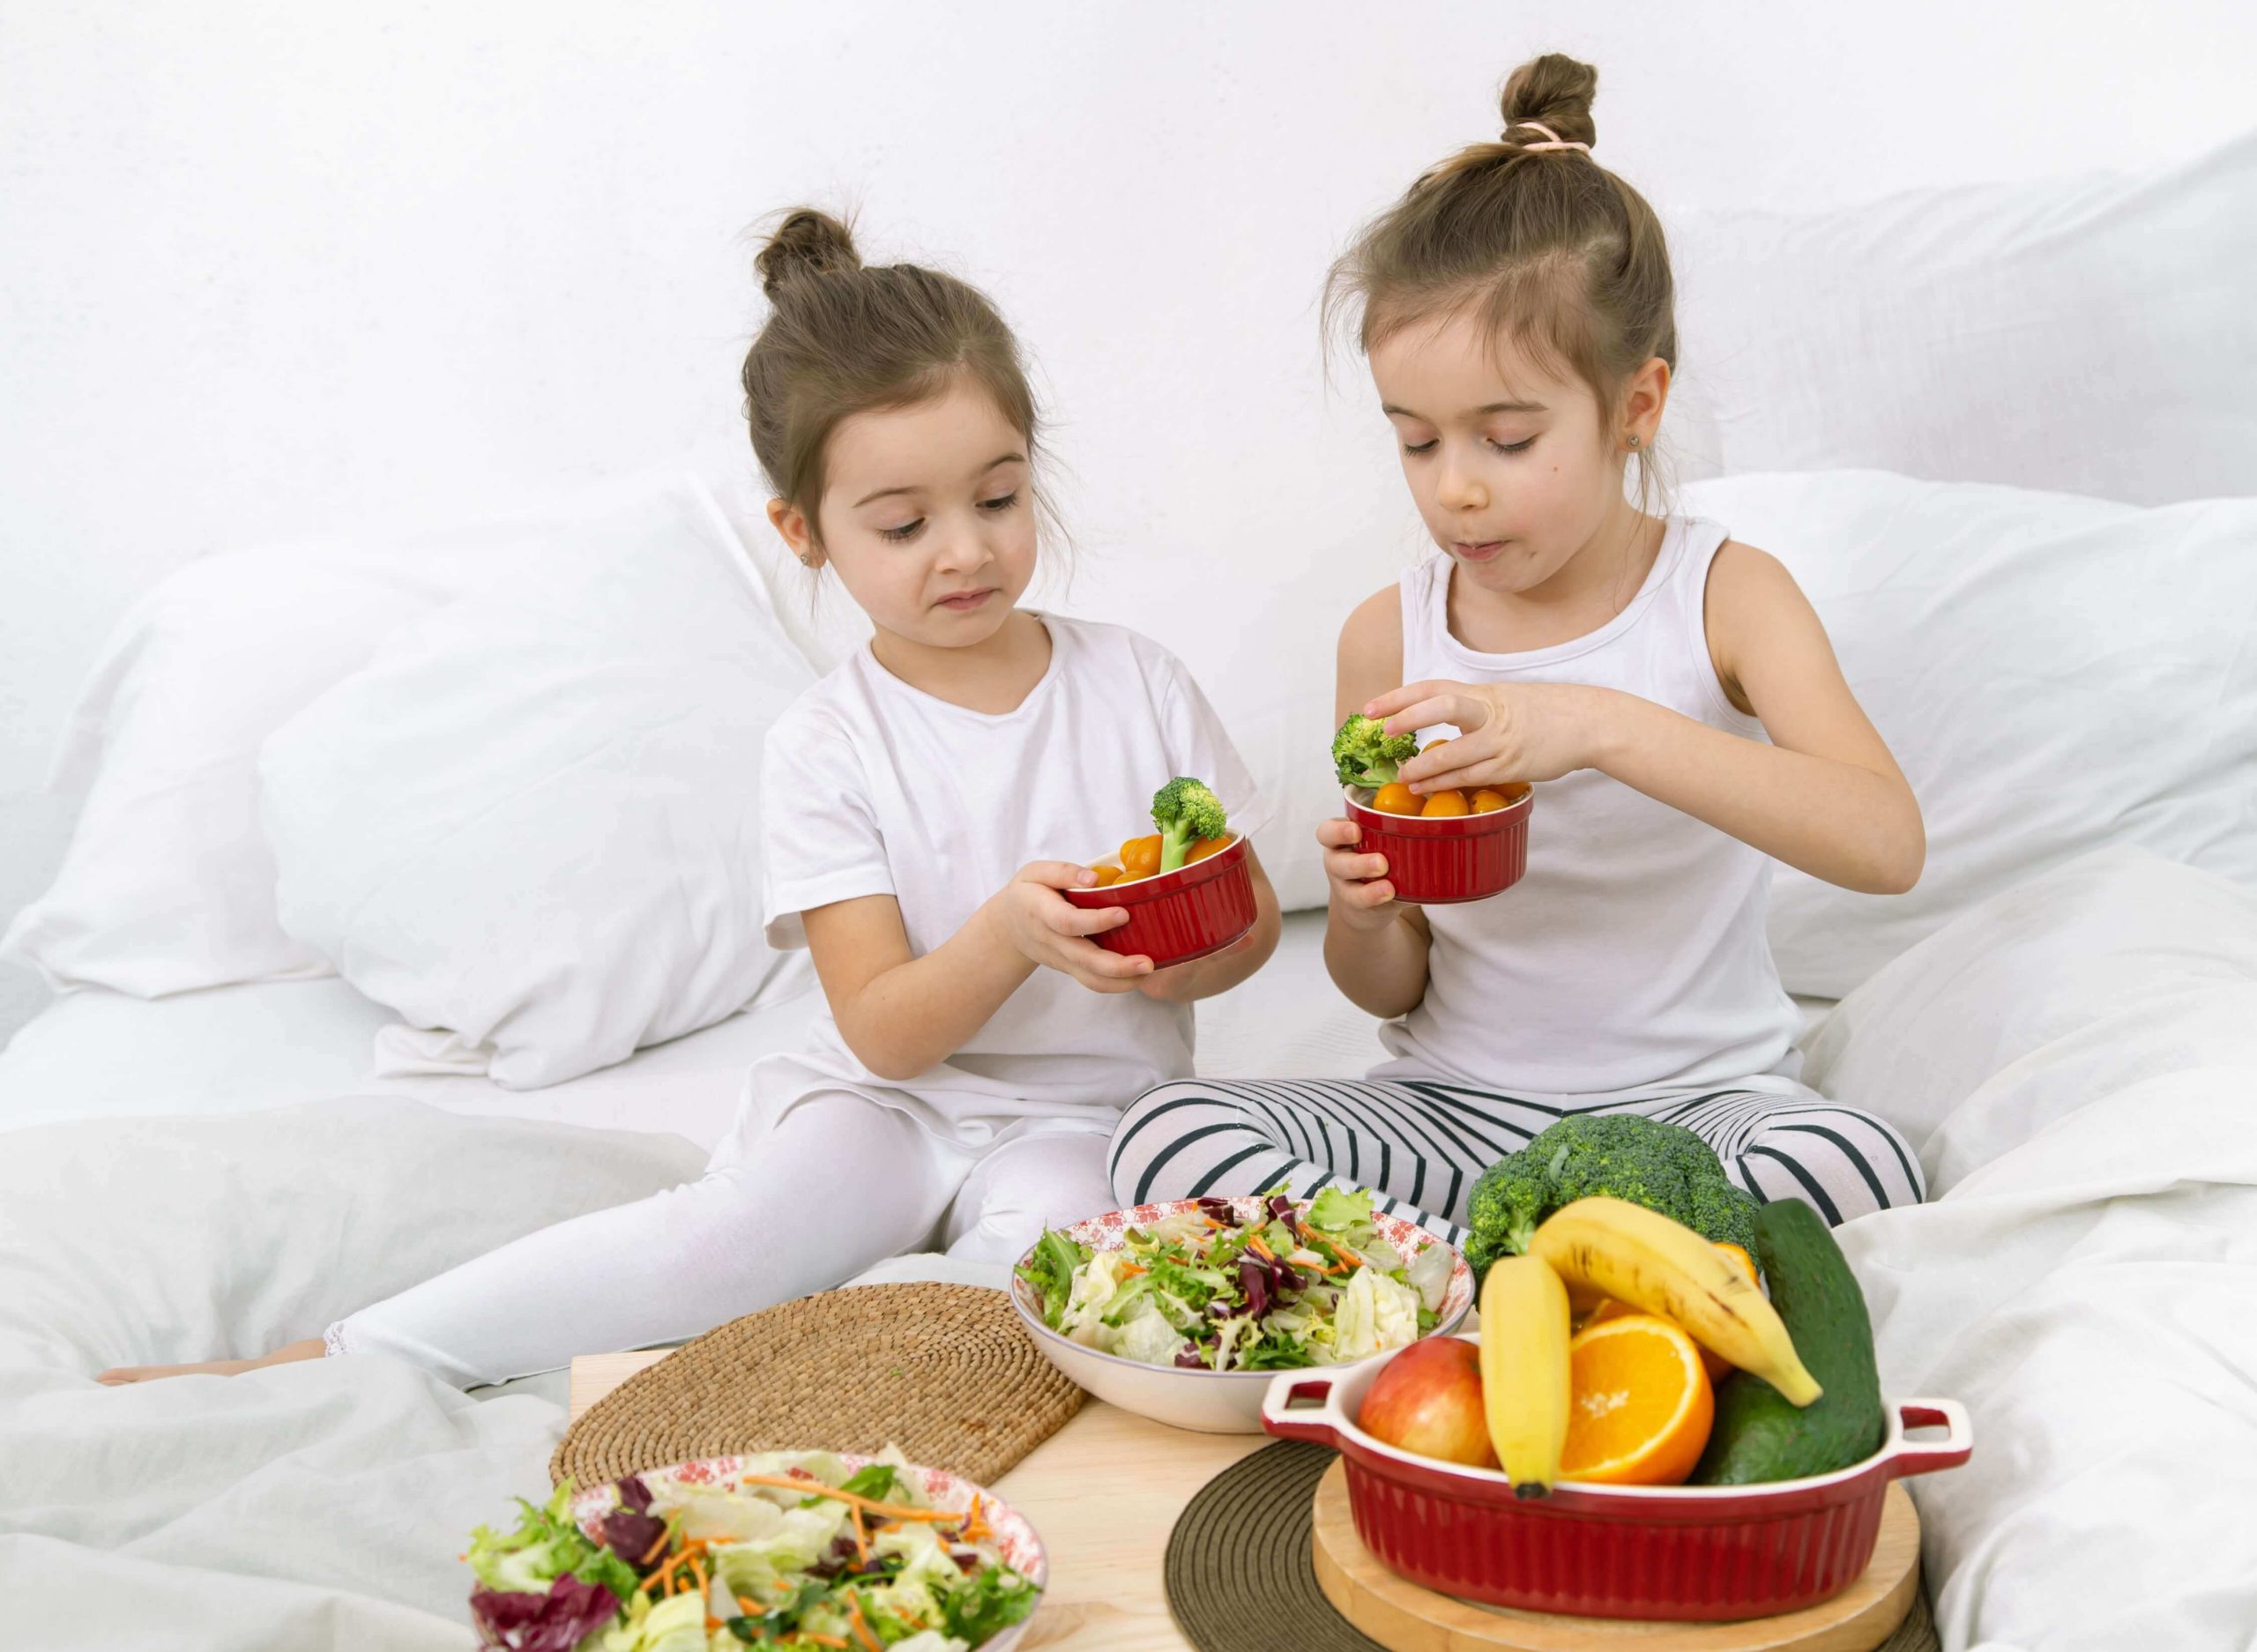 6 Ways to Get Your Kids to Eat Their Veggies